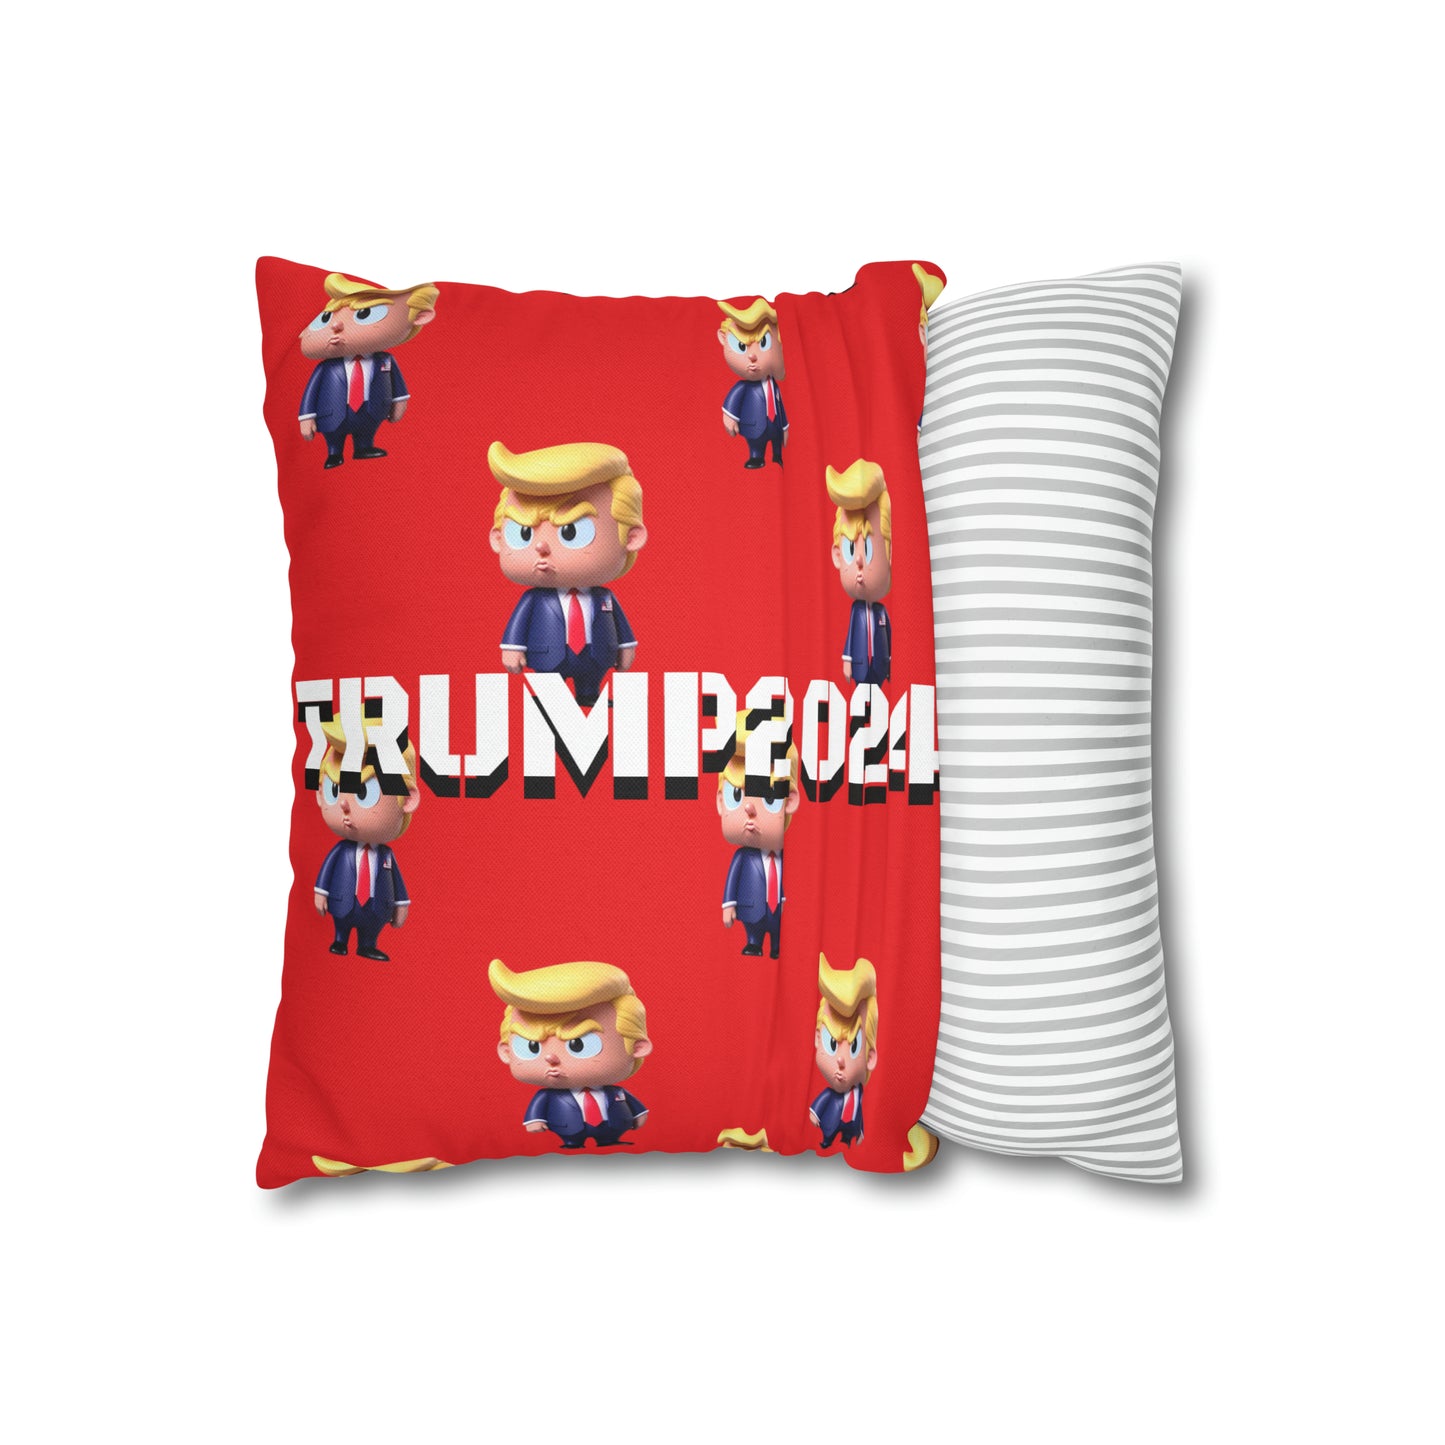 Little Trump 2024 Republican Red Soft Comfy Throw Pillow Case MAGA Gift